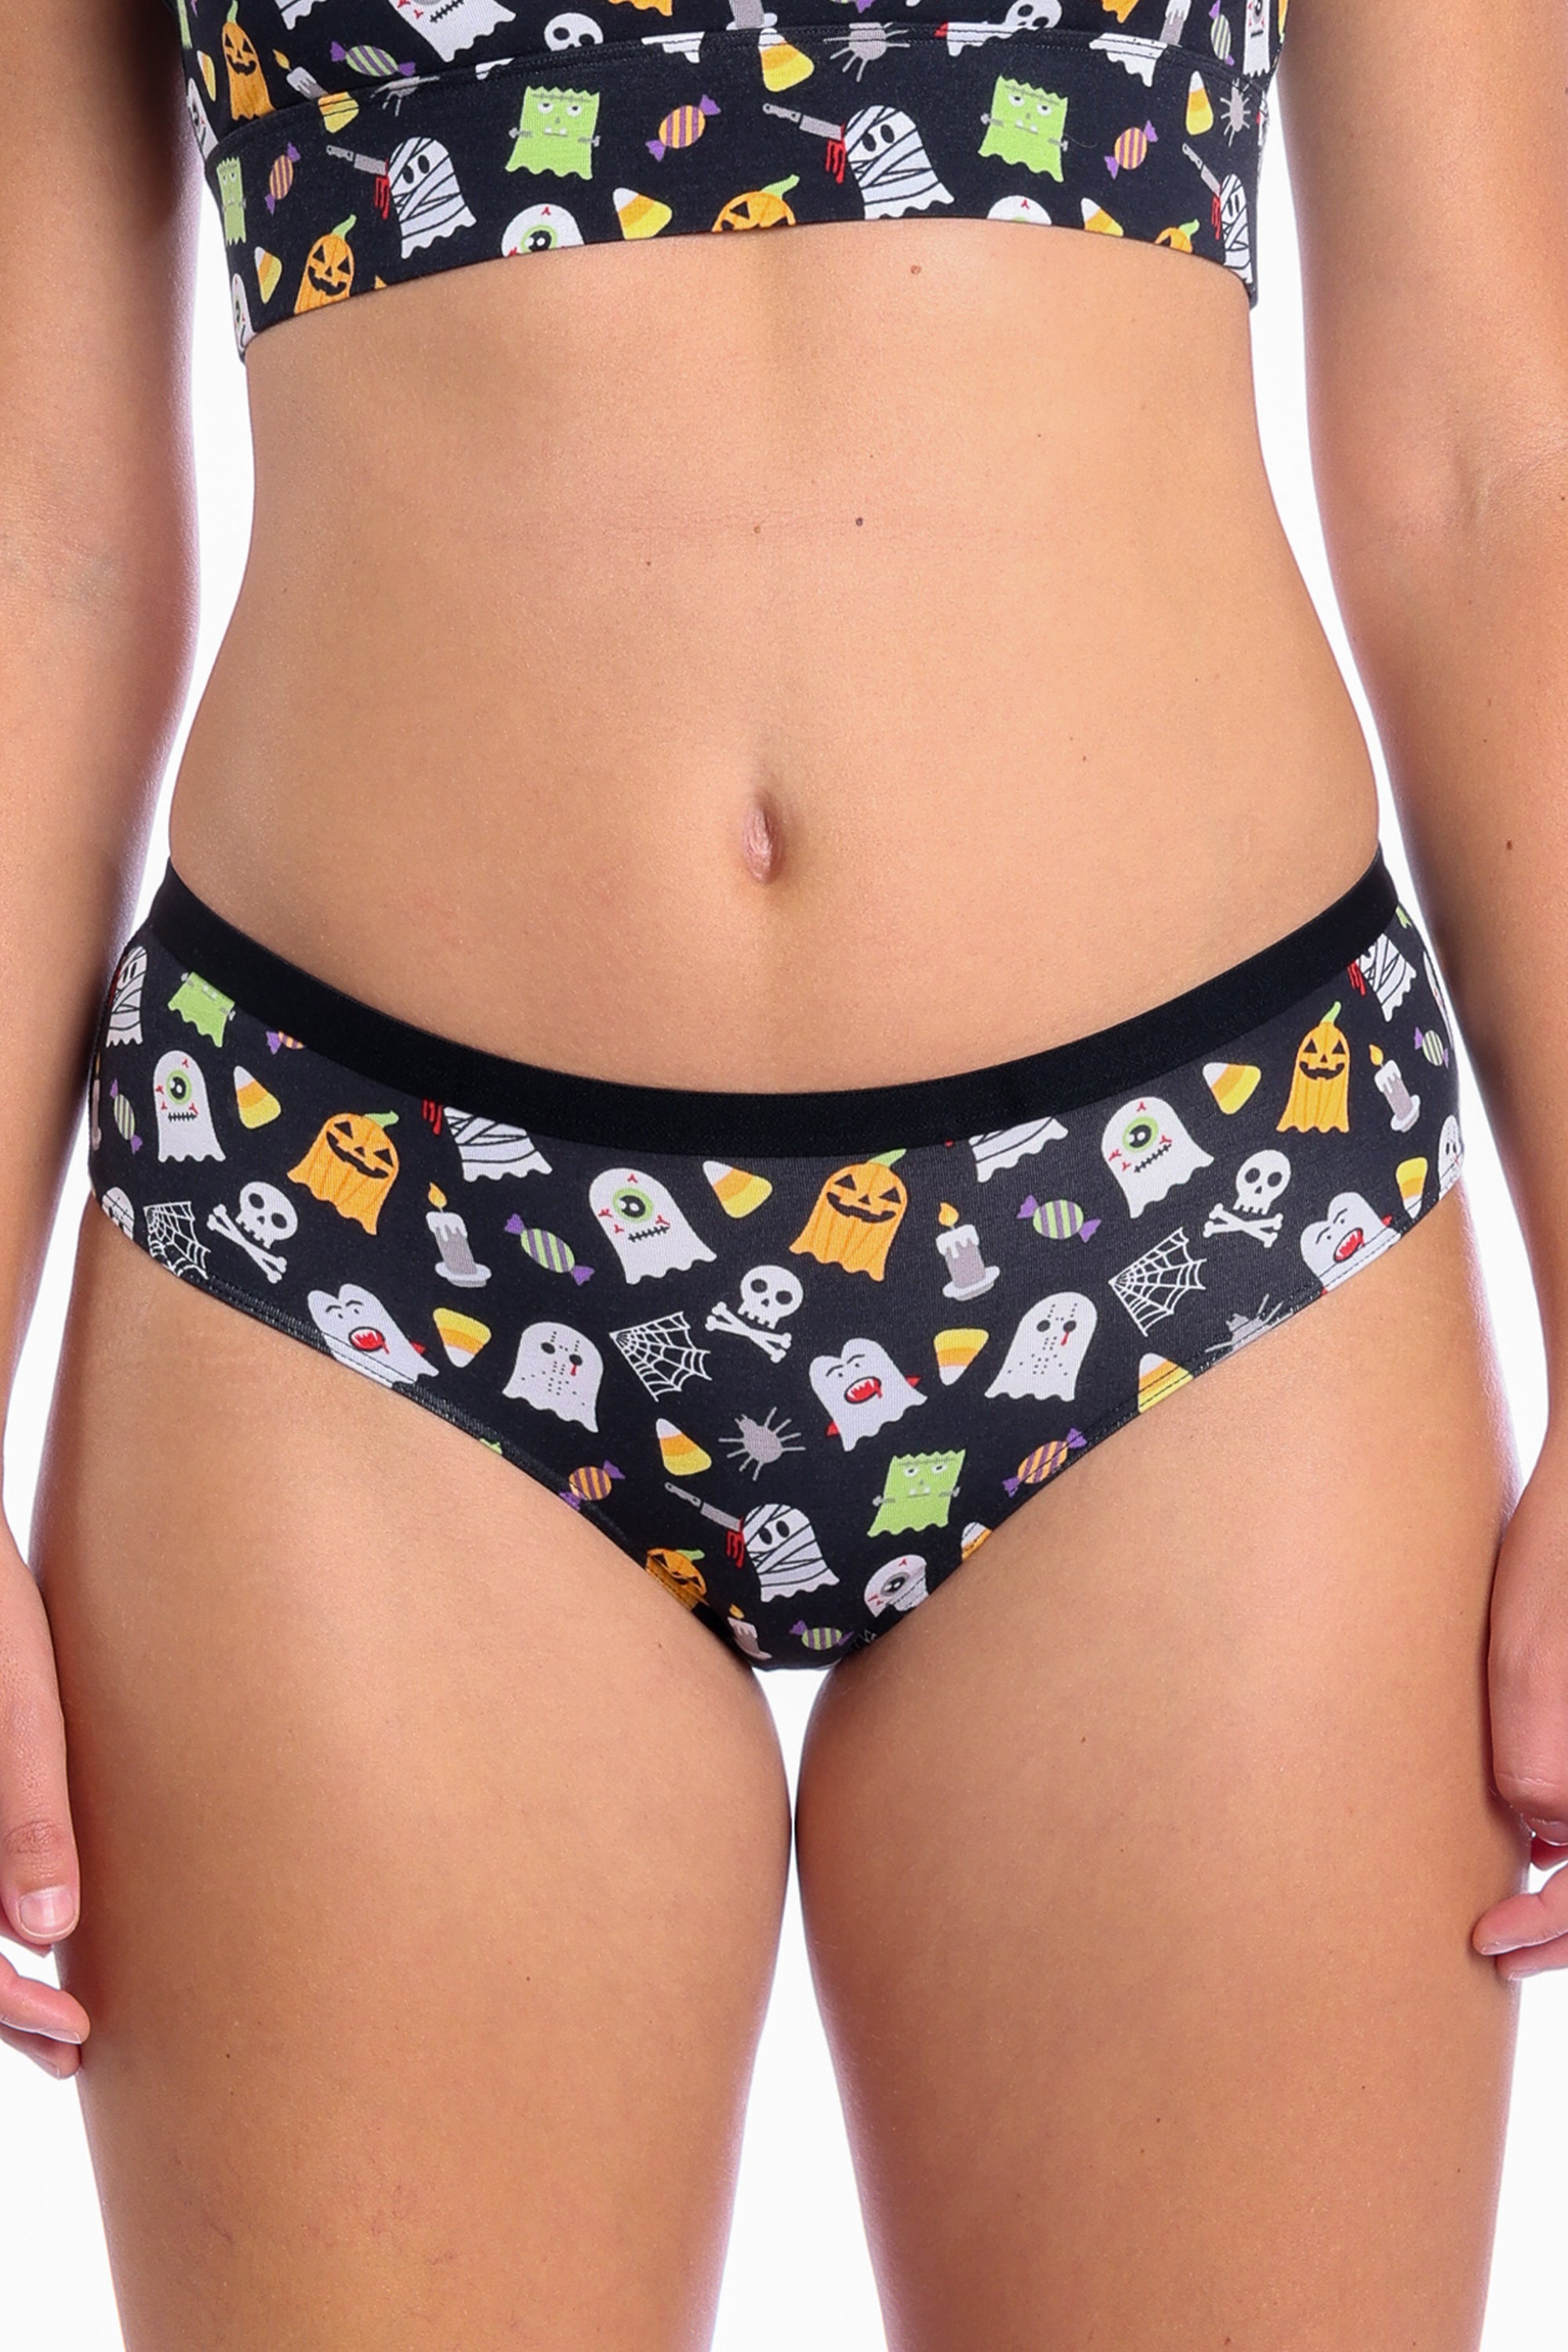 Best Deal for KicKee Pants Printed Girls Halloween Underwear, Incredibly